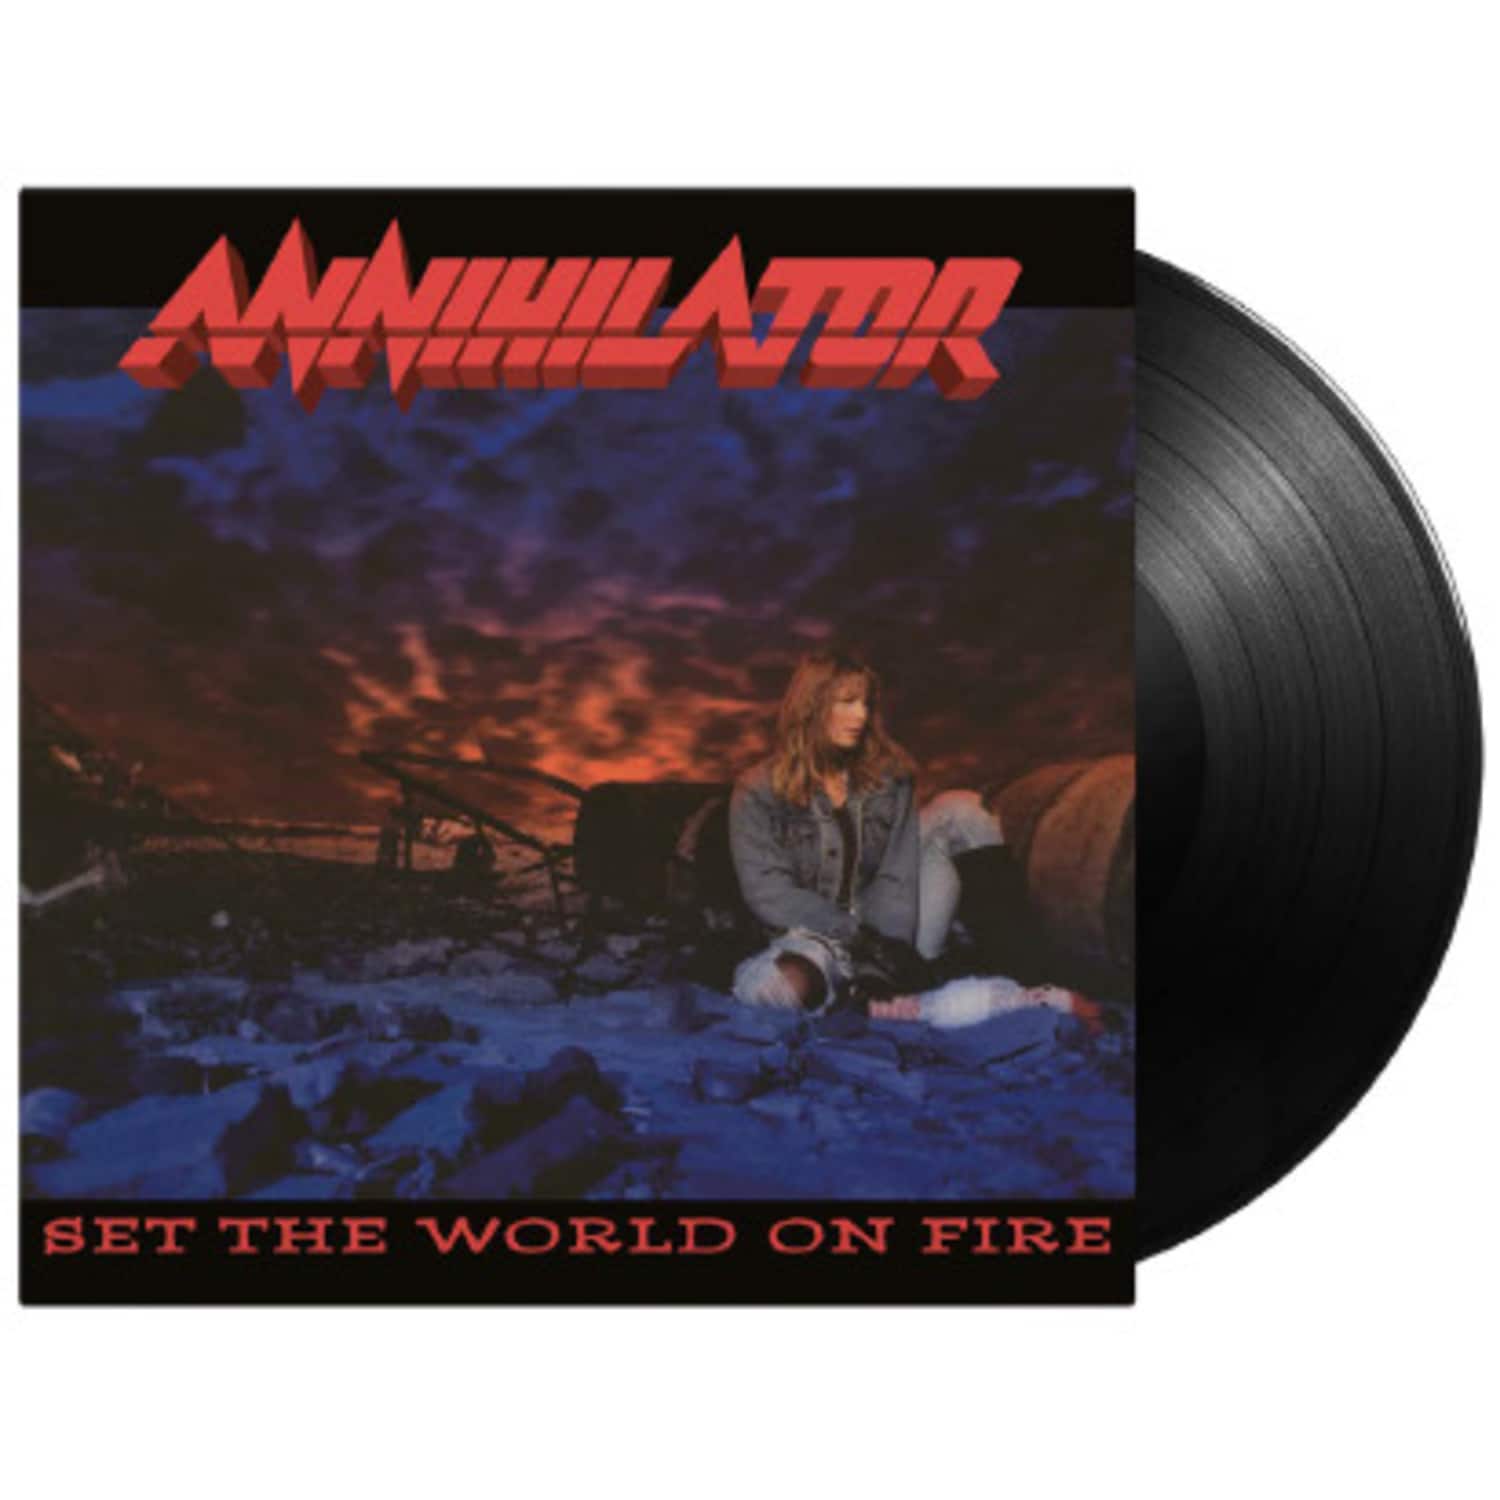 Annihilator - SET THE WORLD ON FIRE 